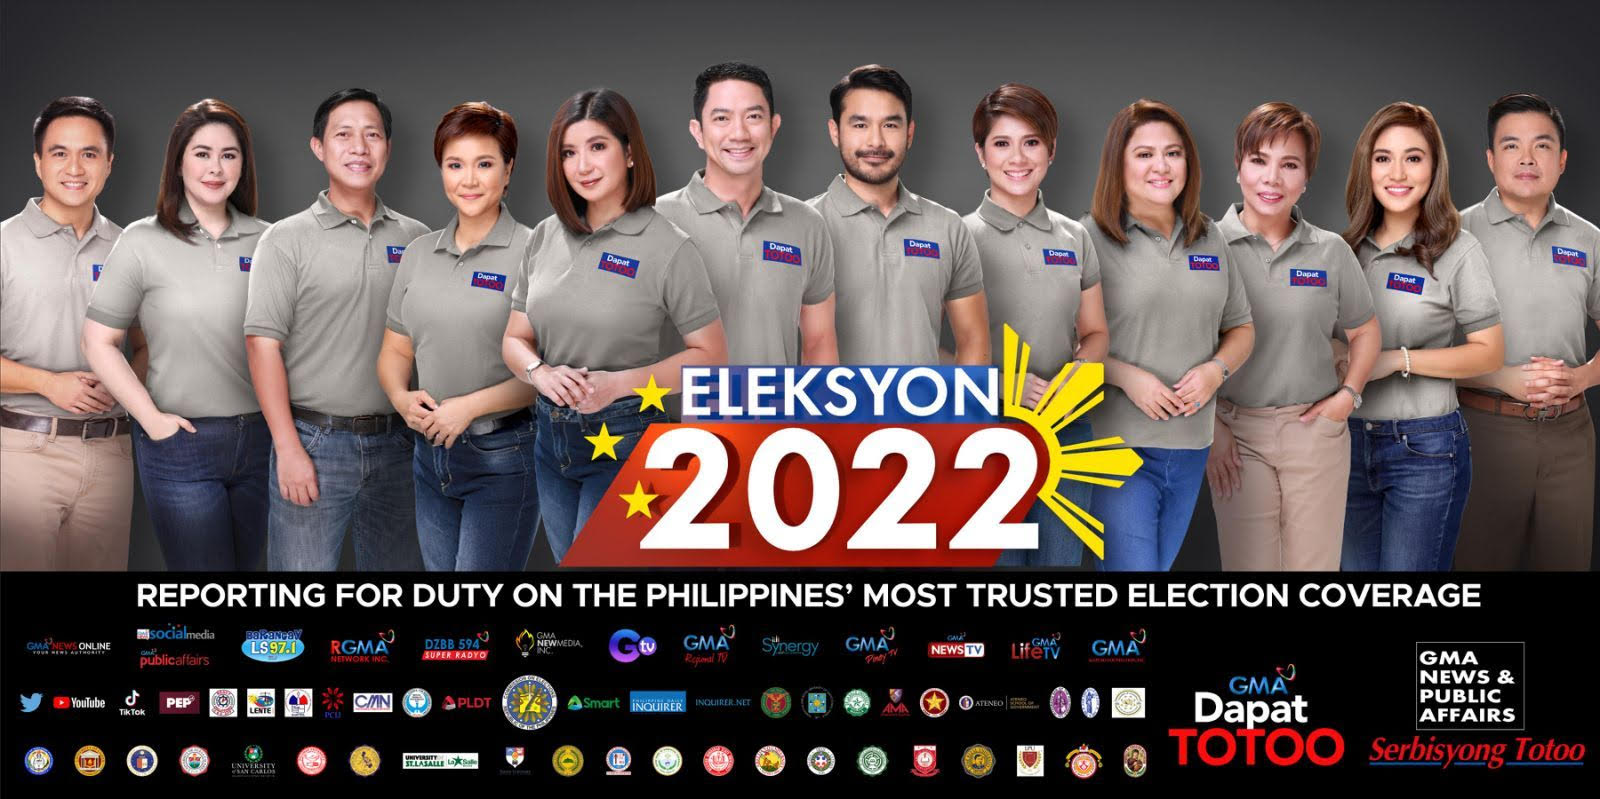  “Eleksyon 2022: The GMA News and Public Affairs Coverage” 